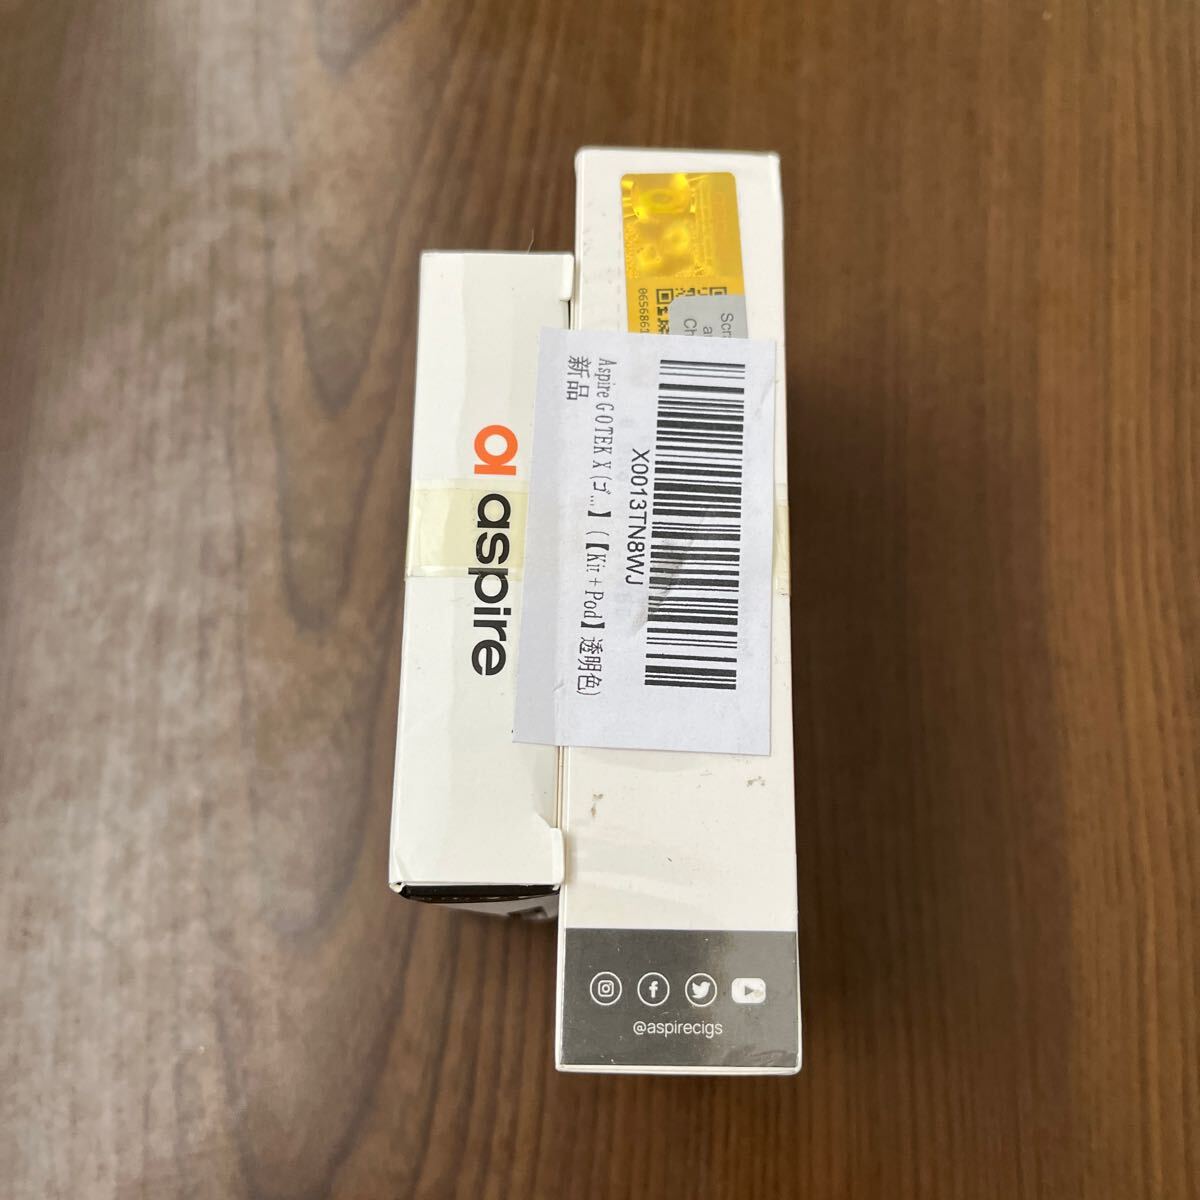 604p1906☆ Aspire GOTEK X (ゴーテック エックス) 電子タバコ ベイプ PODタイプ スターターキット650mah バッテリー本体 + 1箱2個入 の画像2